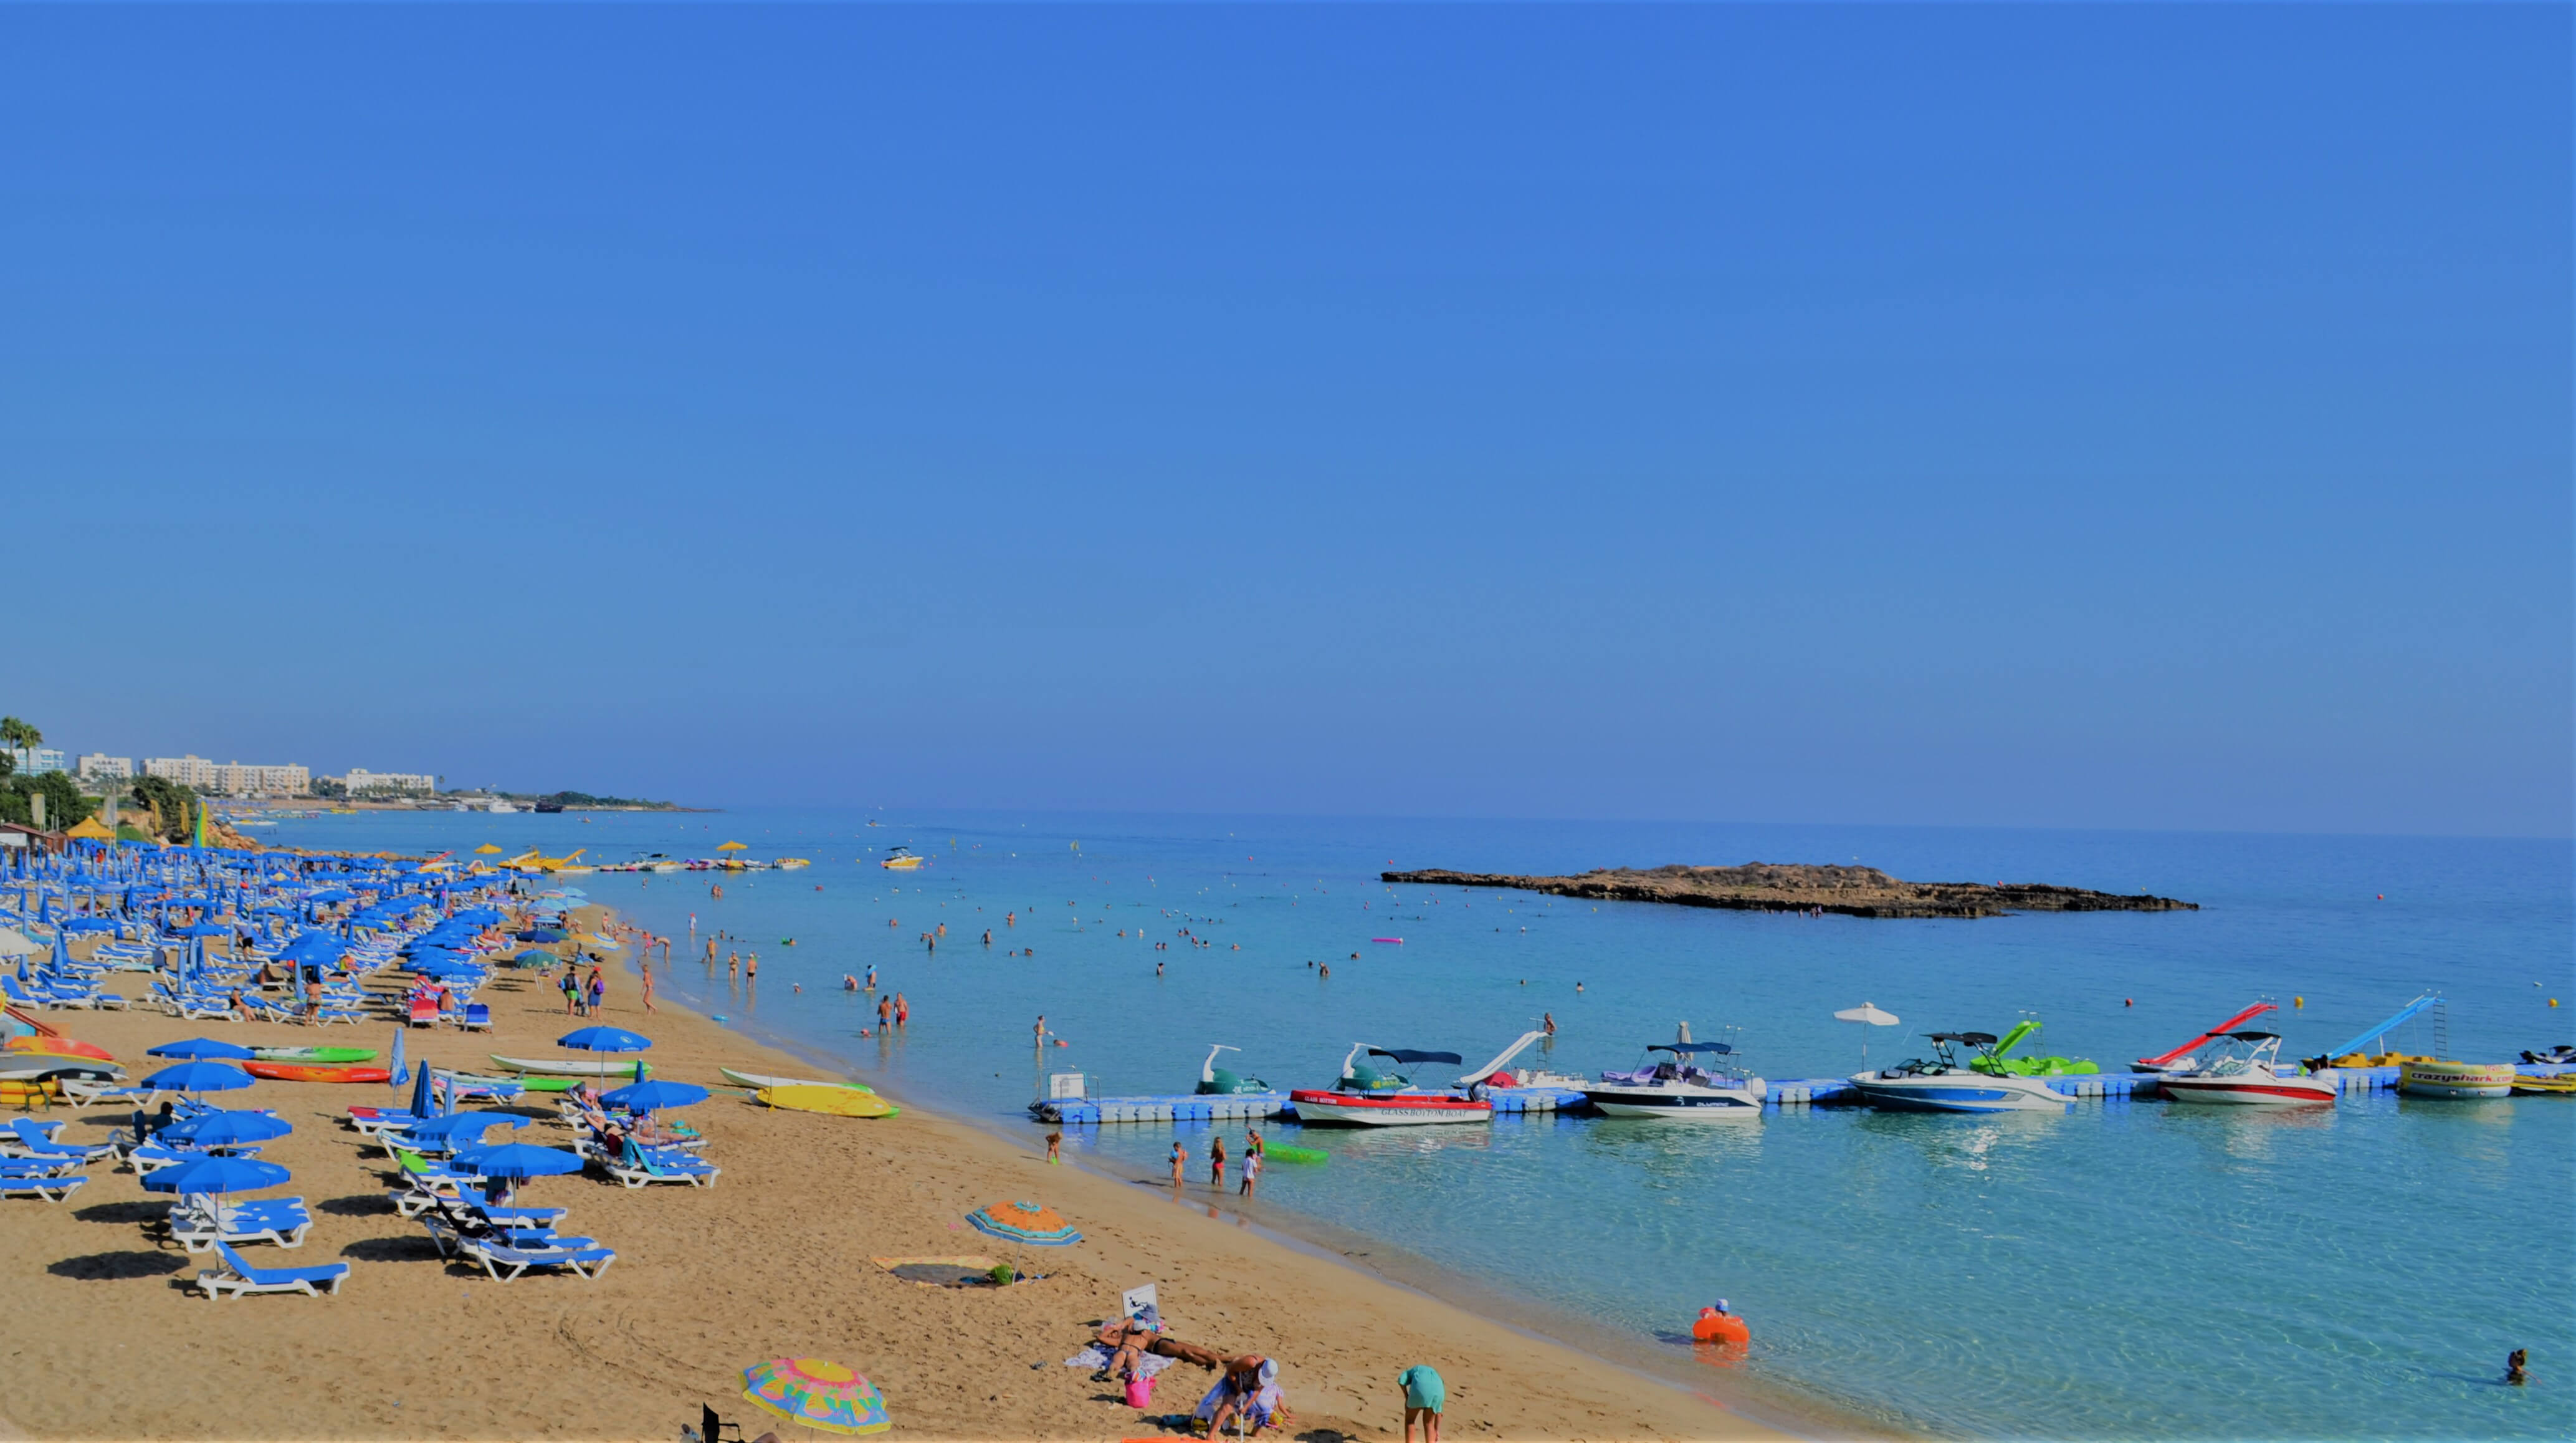 Bay, Protaras | Cyprus Island